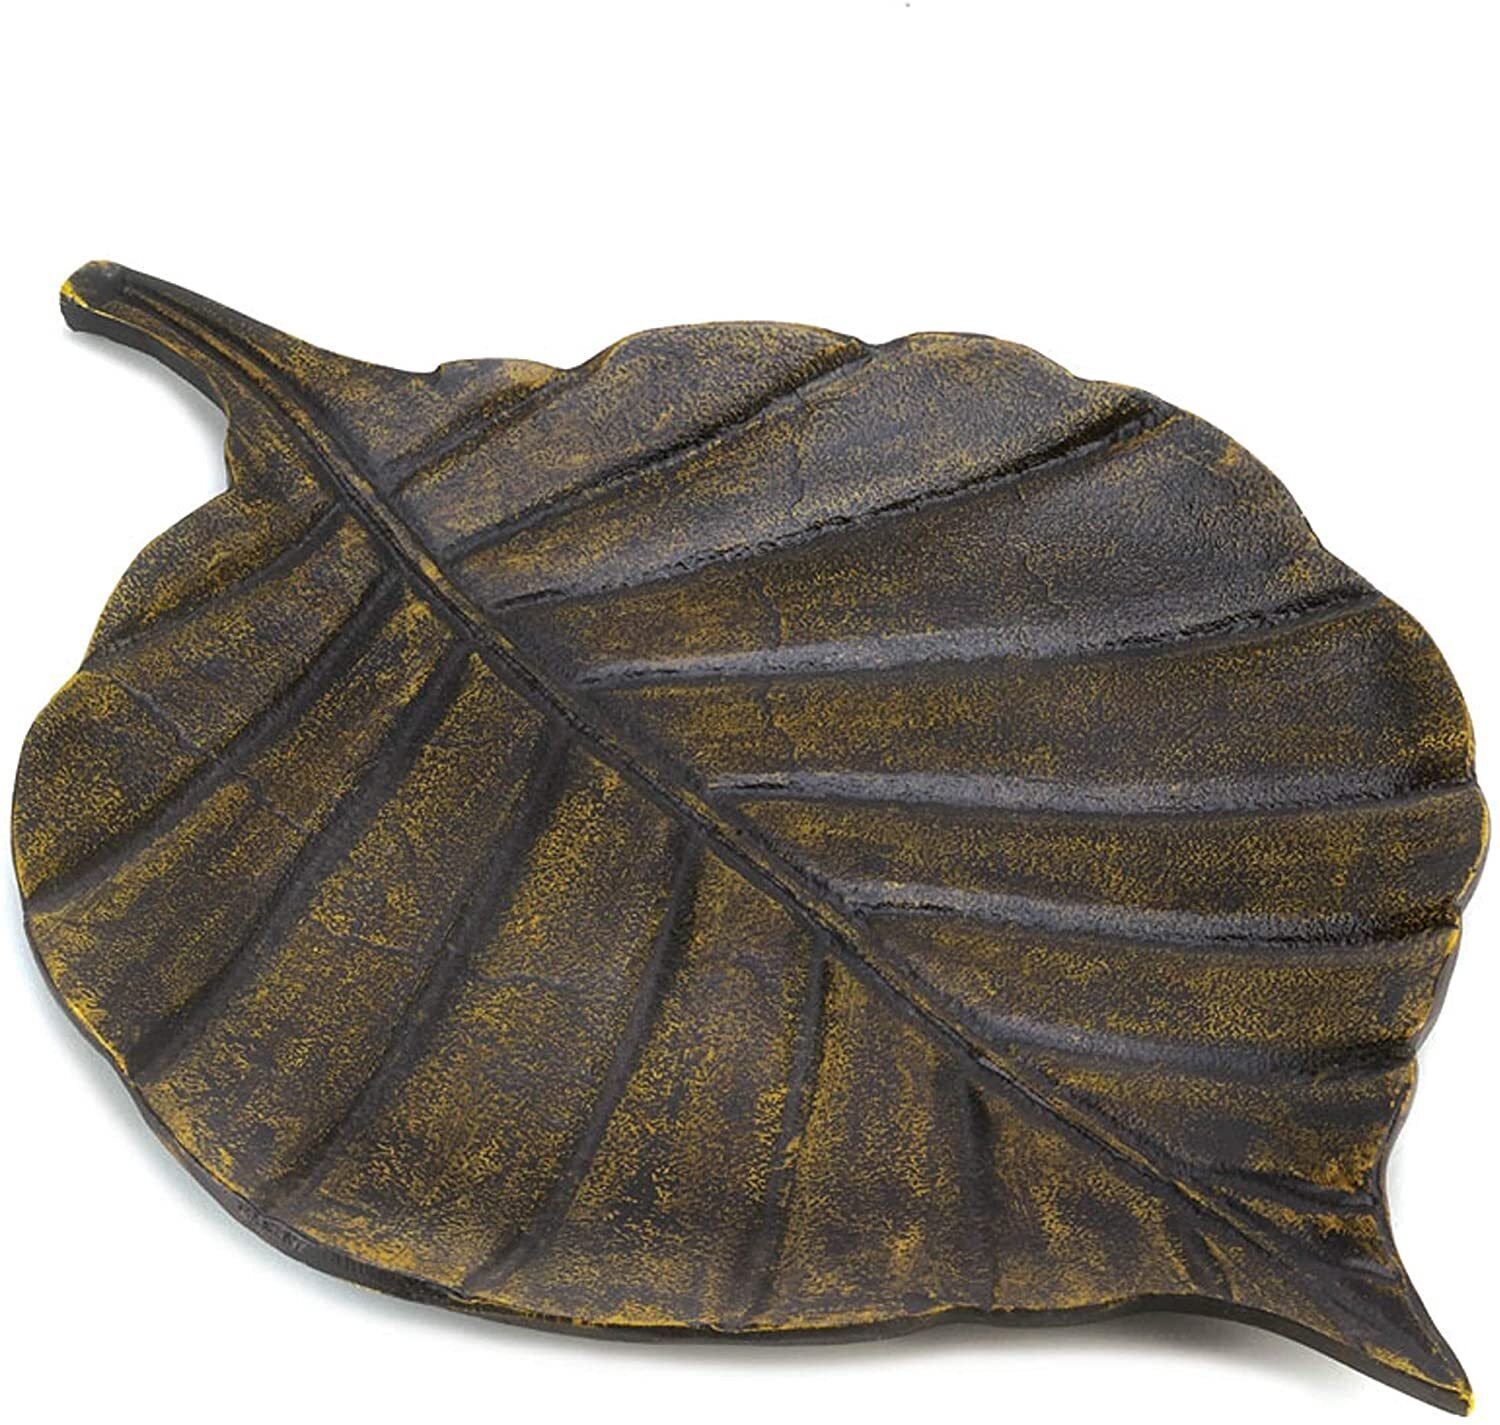 Leaf Shaped Decorative Tray